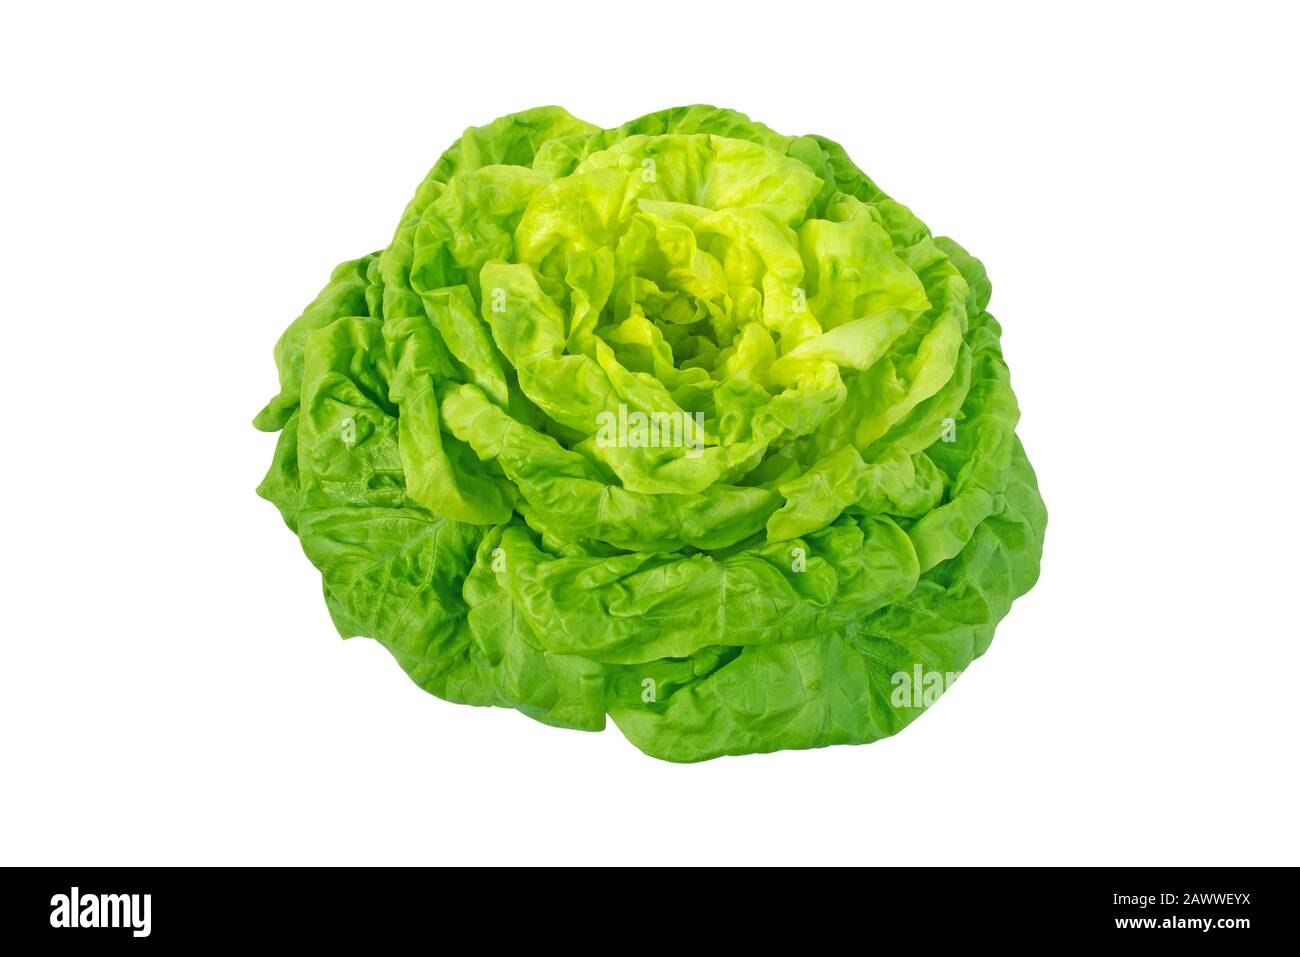 Trocadero lettuce salad head isolated on white. Butterhead variety. Green leafy vegetable. Stock Photo